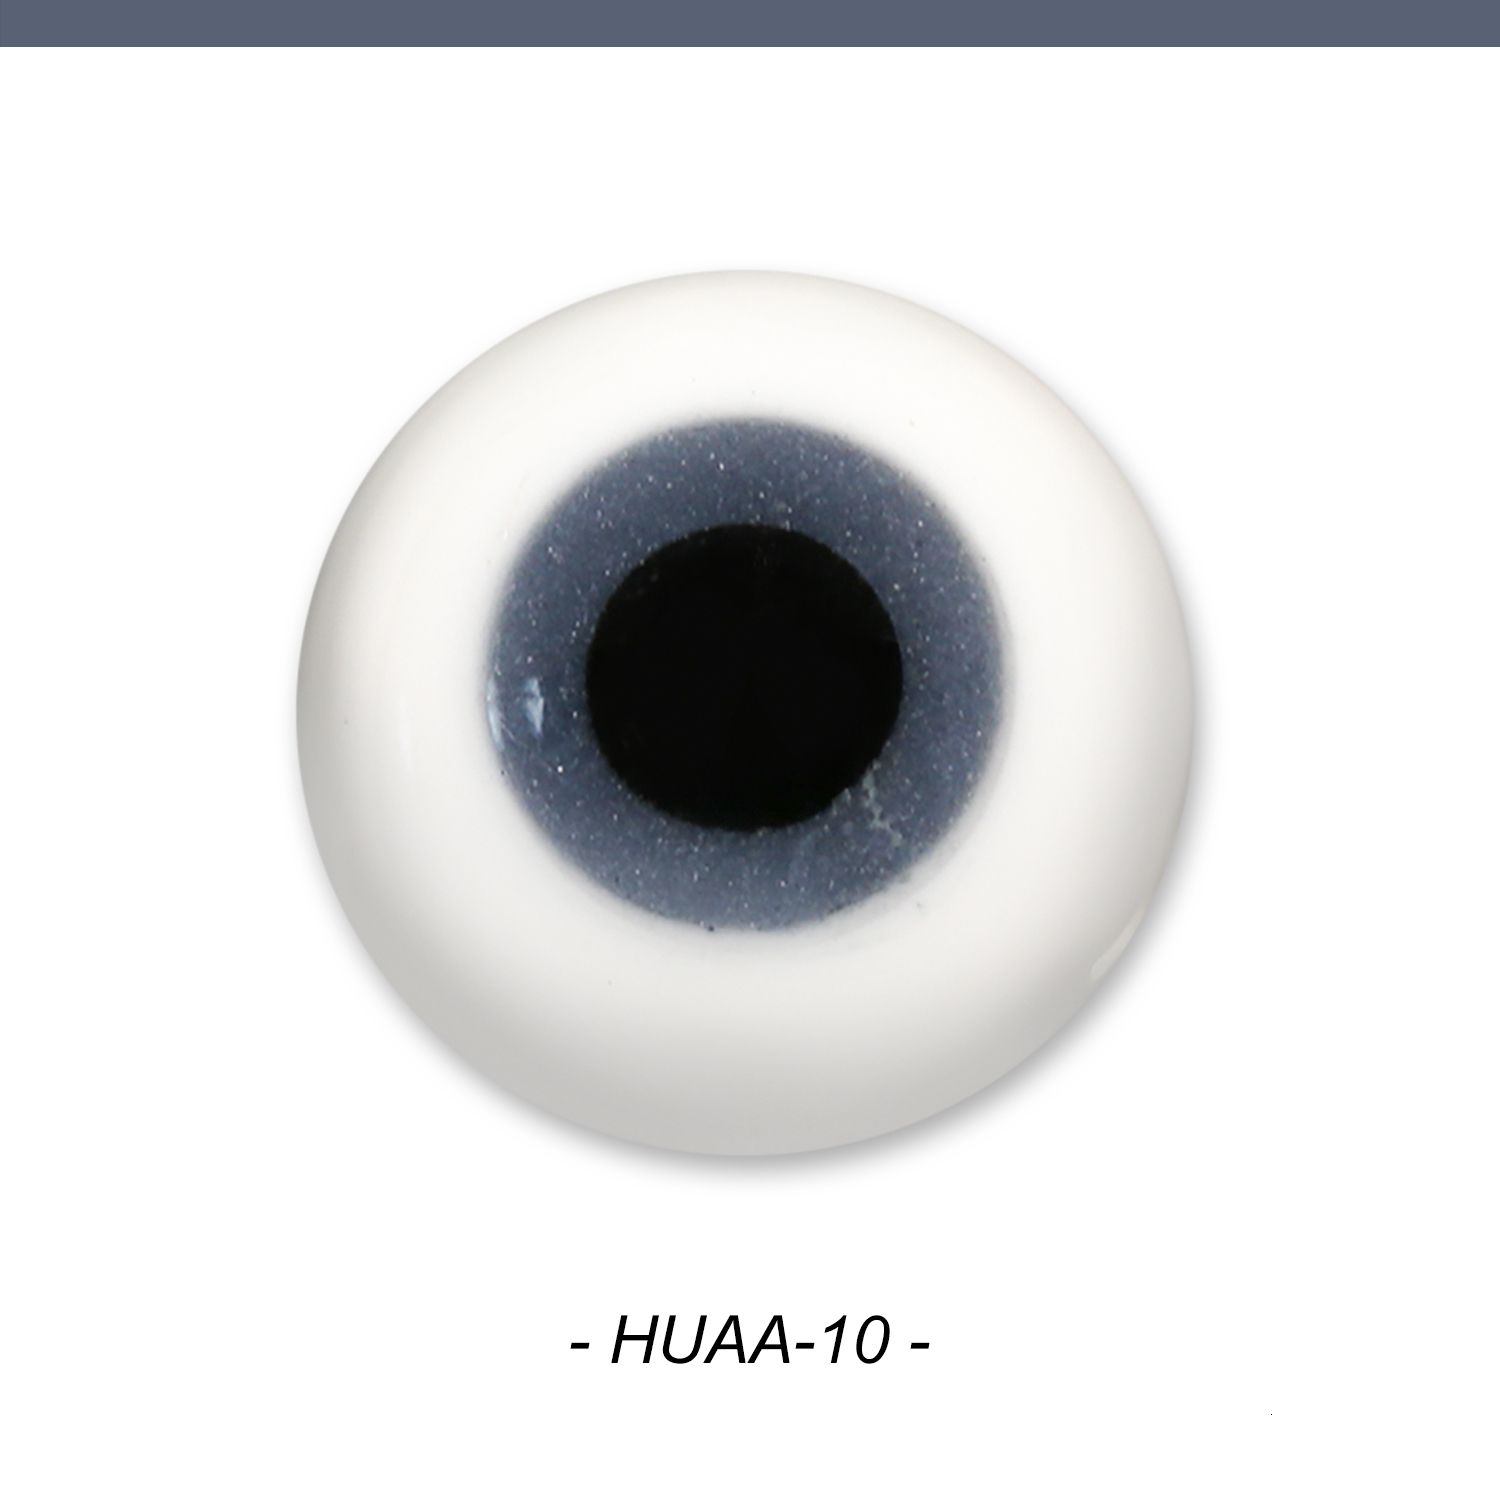 Хуаа-10-16 мм